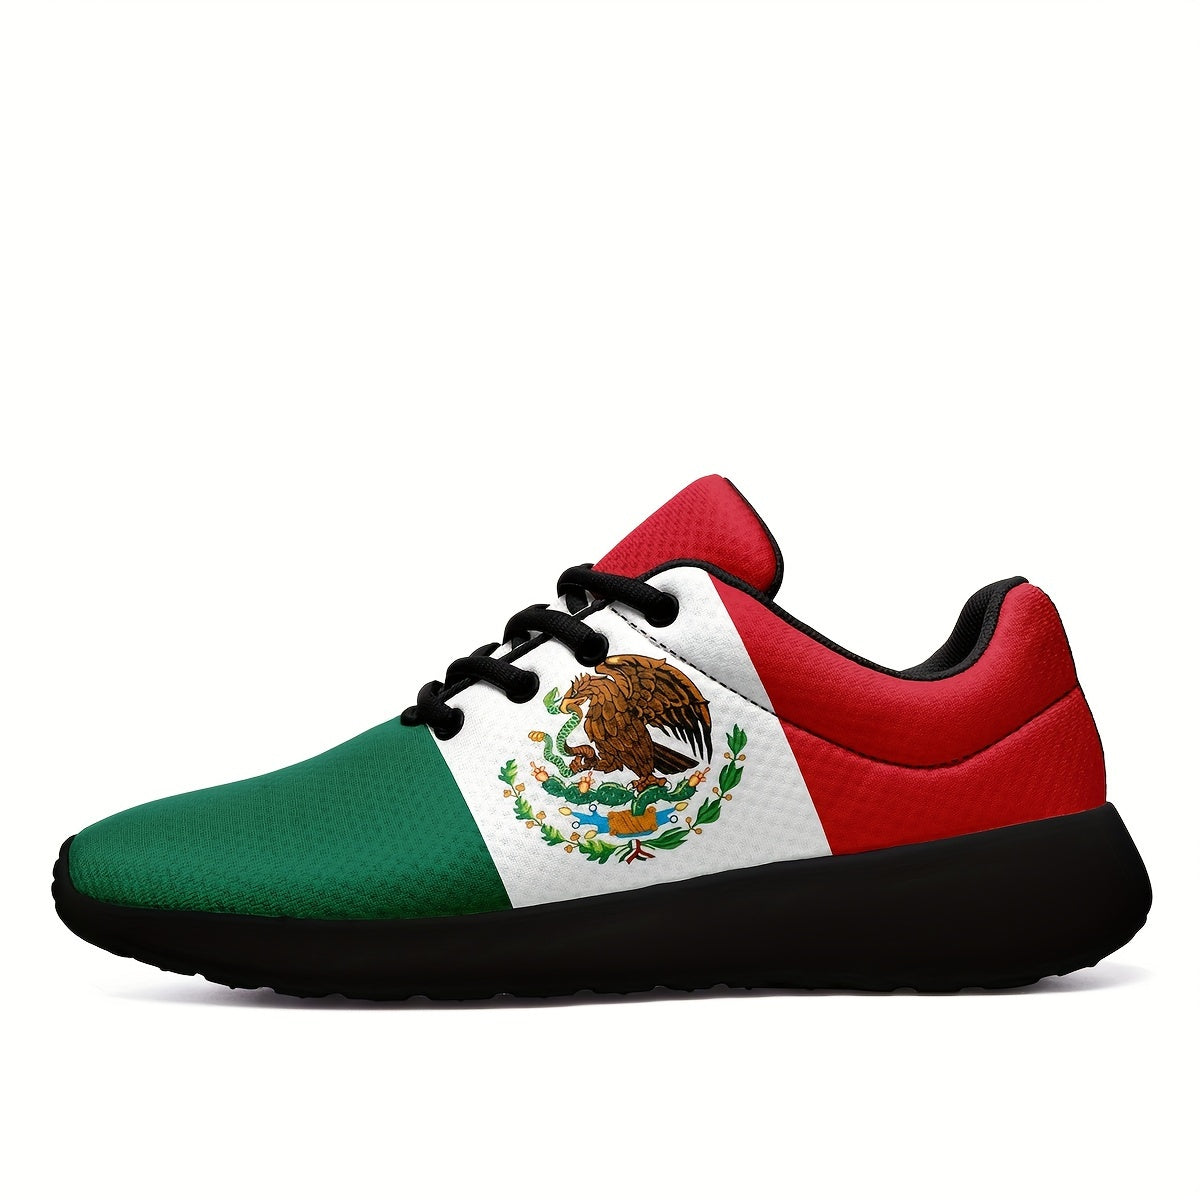 Plus Size Men's Mexico Flag Pattern Sneakers, Soft Sole